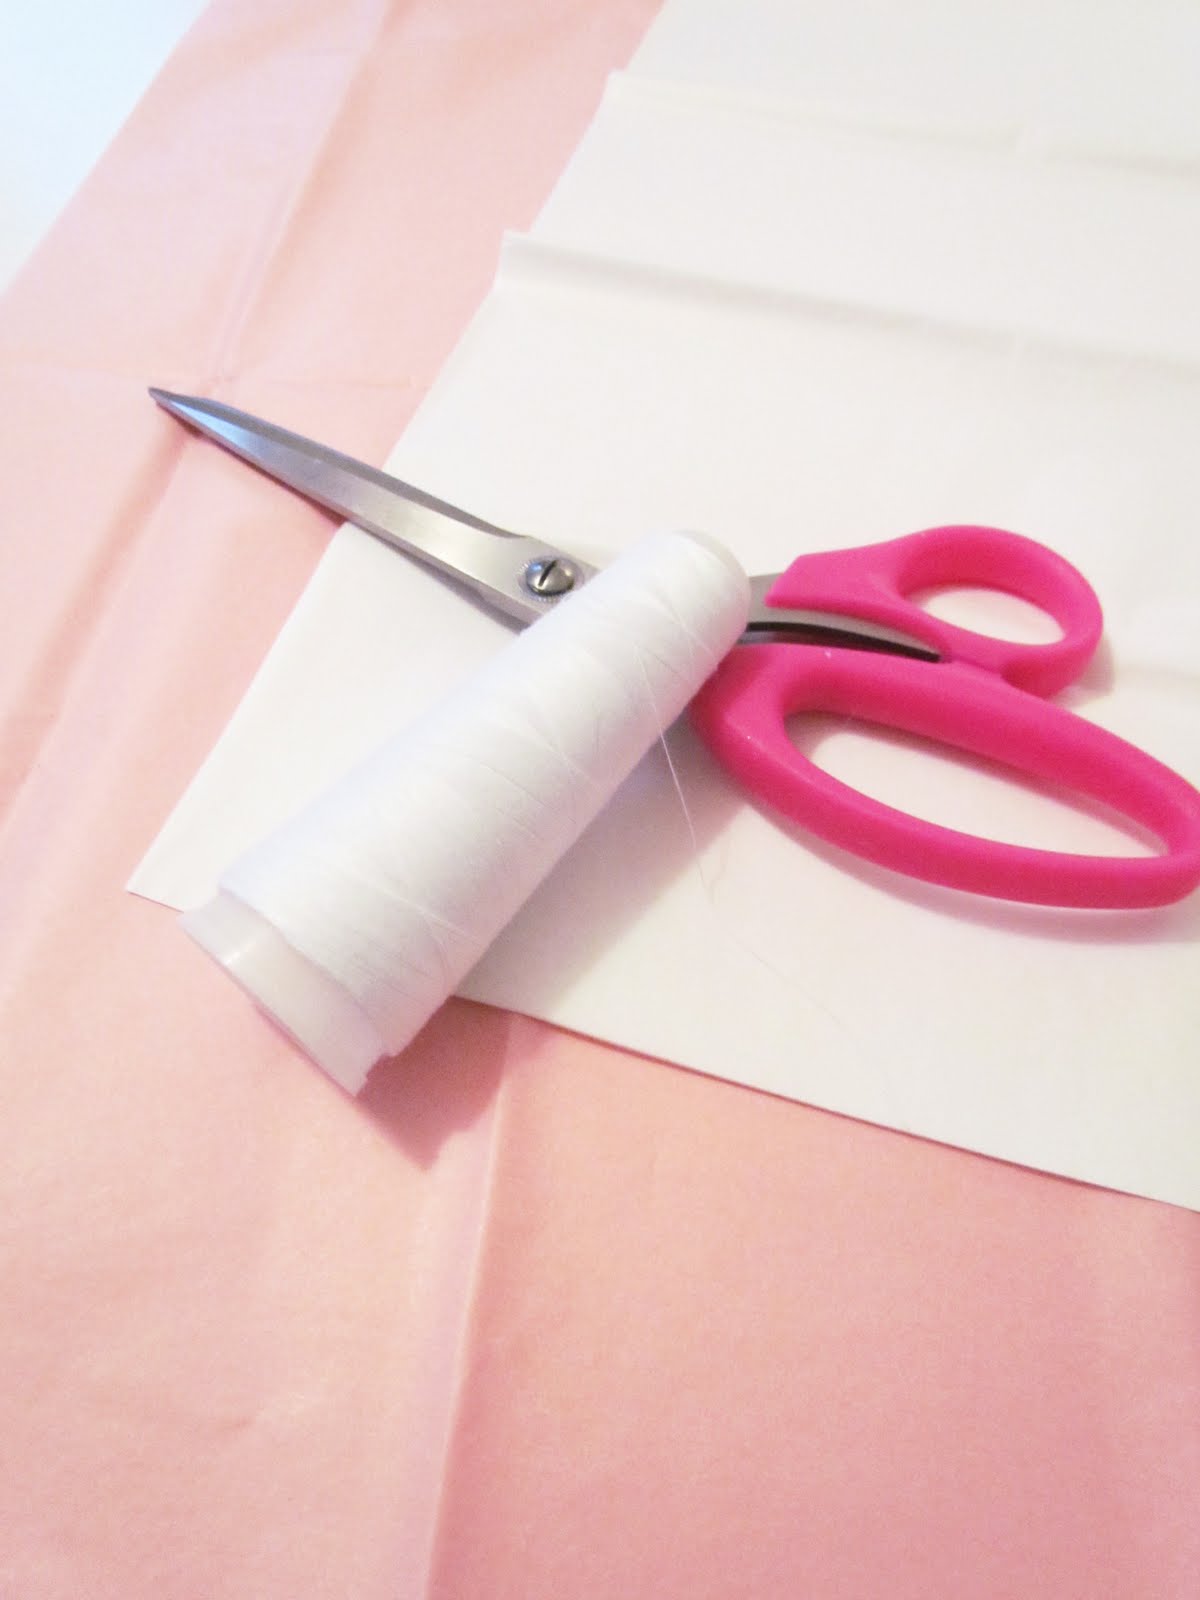 My DIY Tissue Paper Flower Wedding Centerpieces - My Girlish Whims